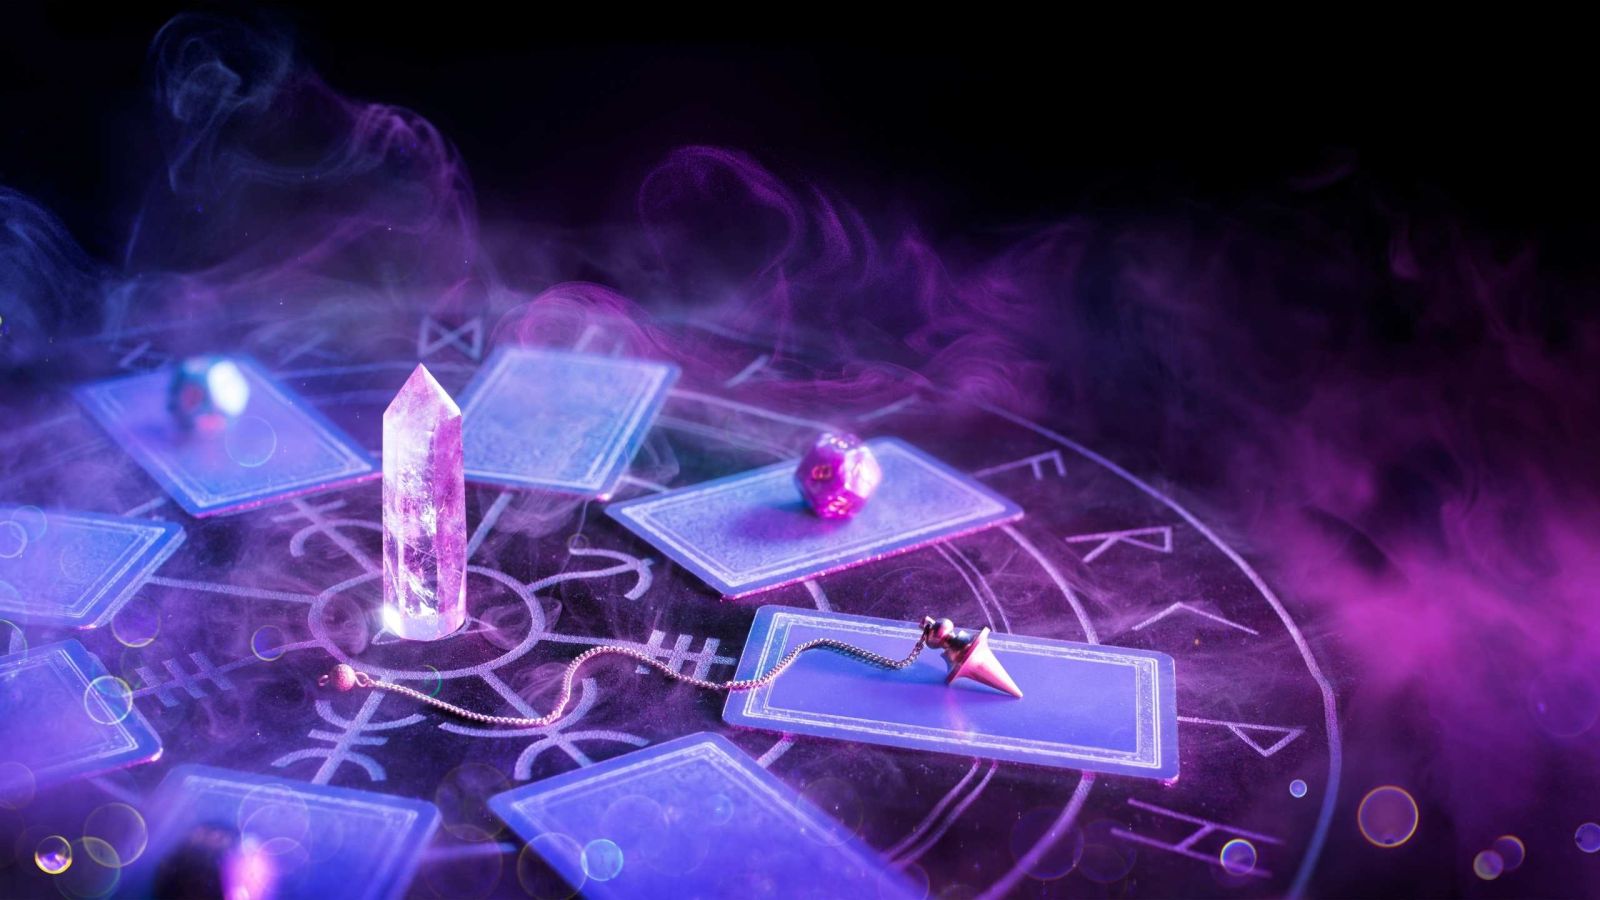 tarot cards on purple table and mist